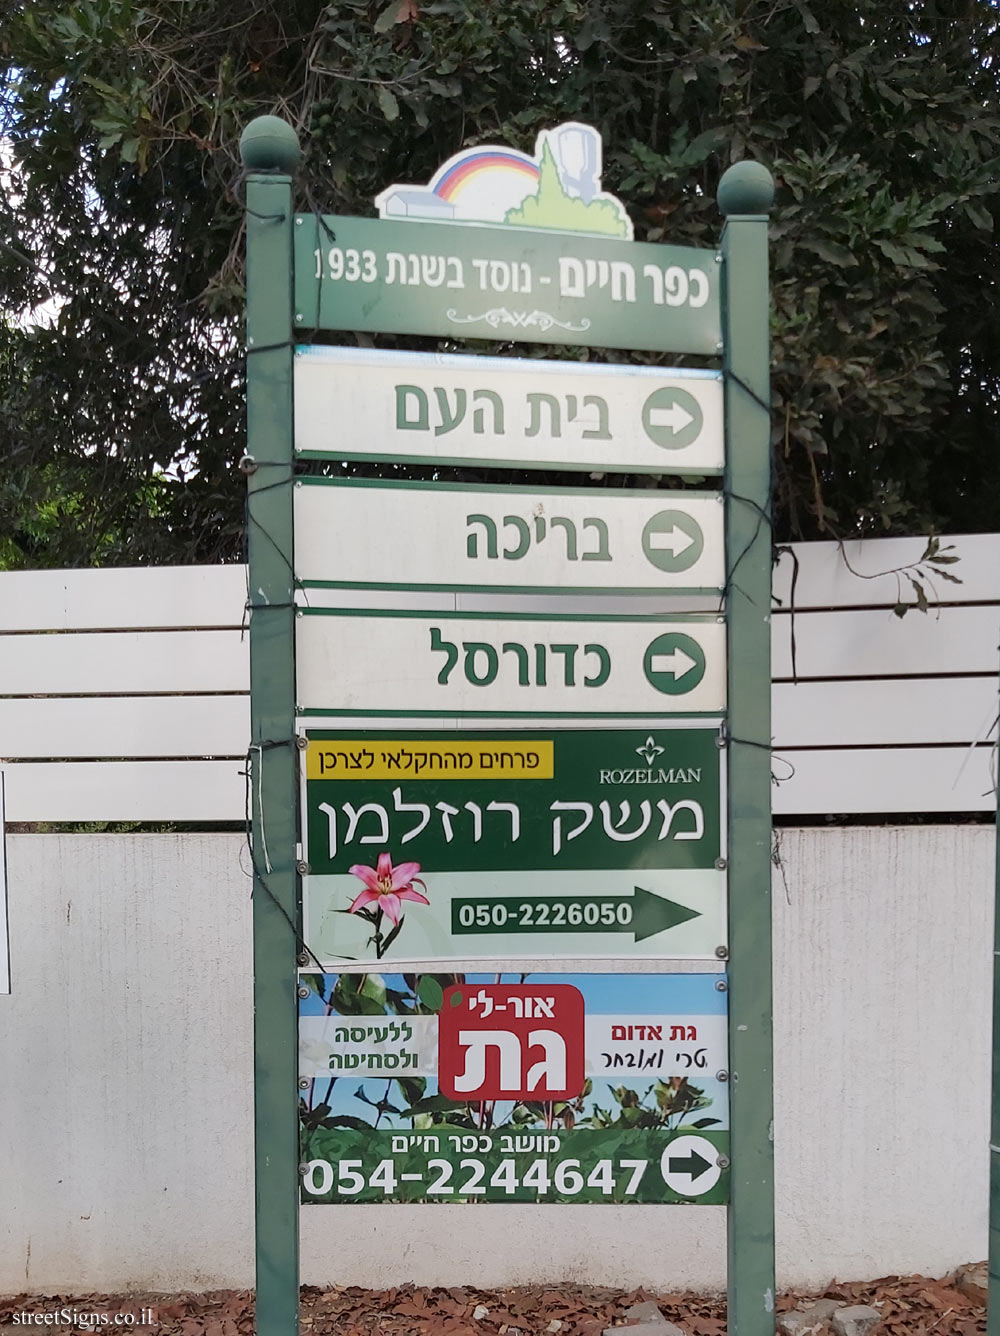 Kfar Haim - a direction sign for sites in the moshav